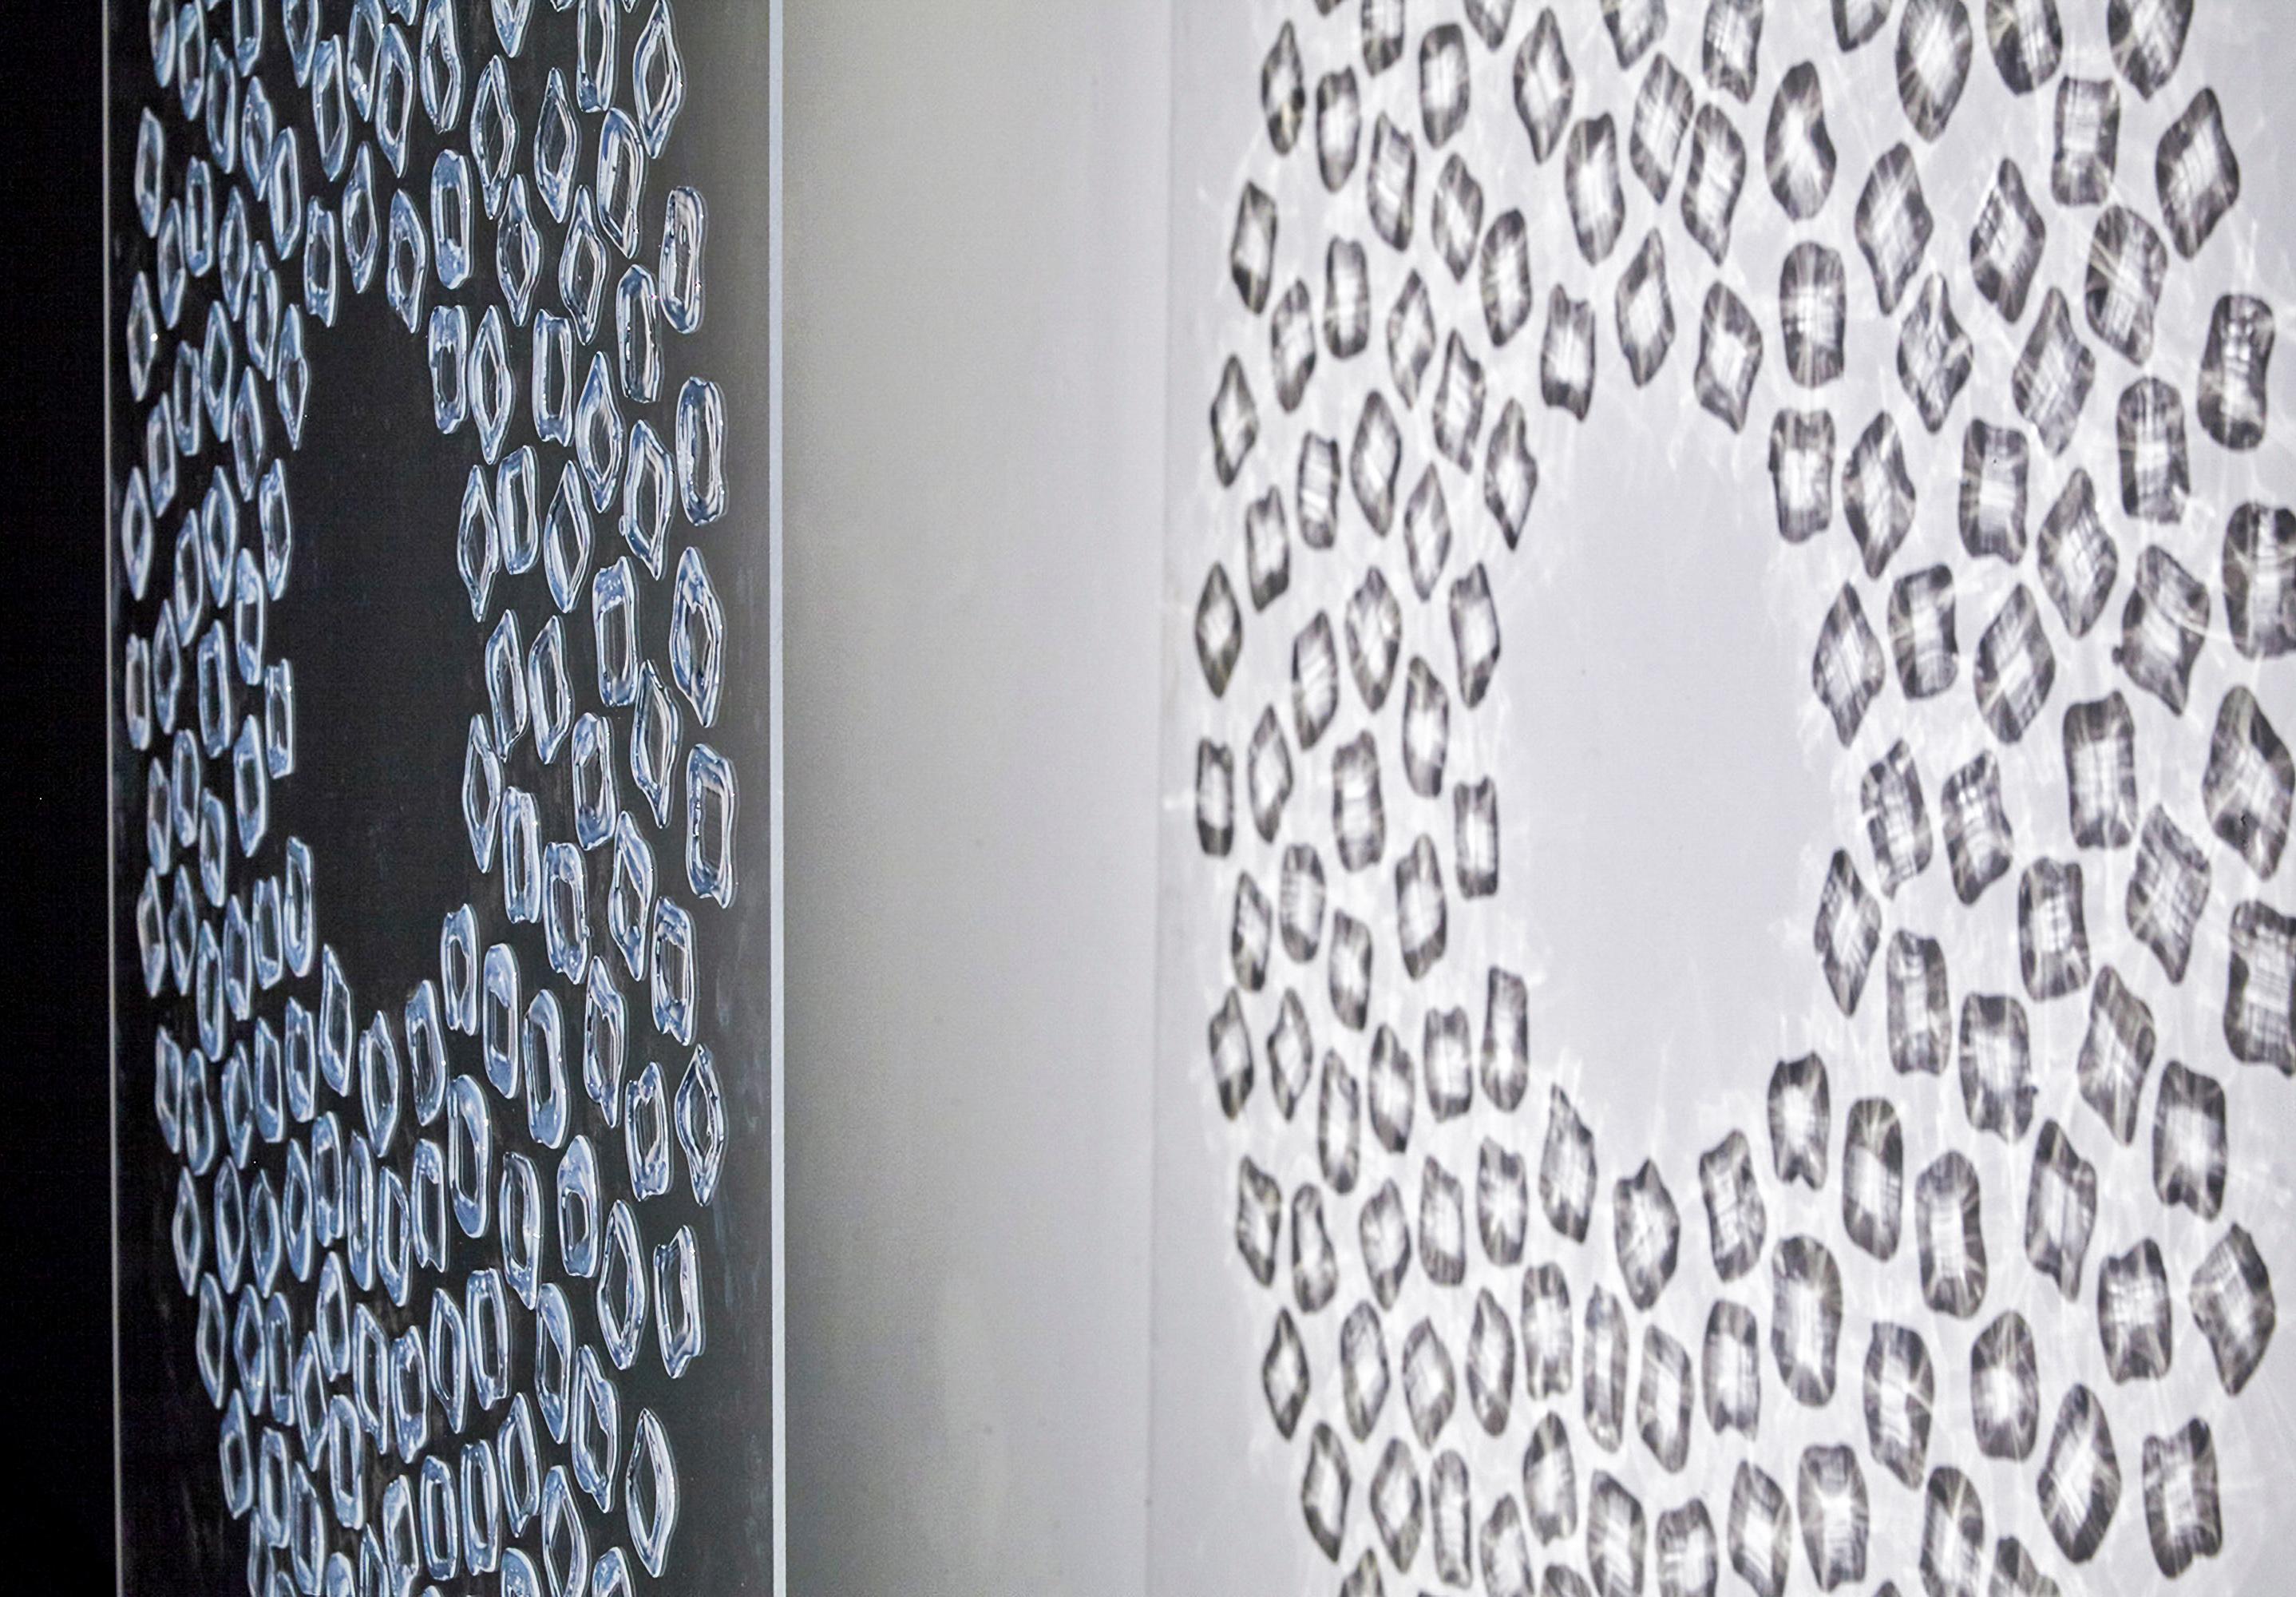 Untitled No 46 - large, transparent, shadow, wall mounted acrylic on plexiglass - Painting by Ania Machudera